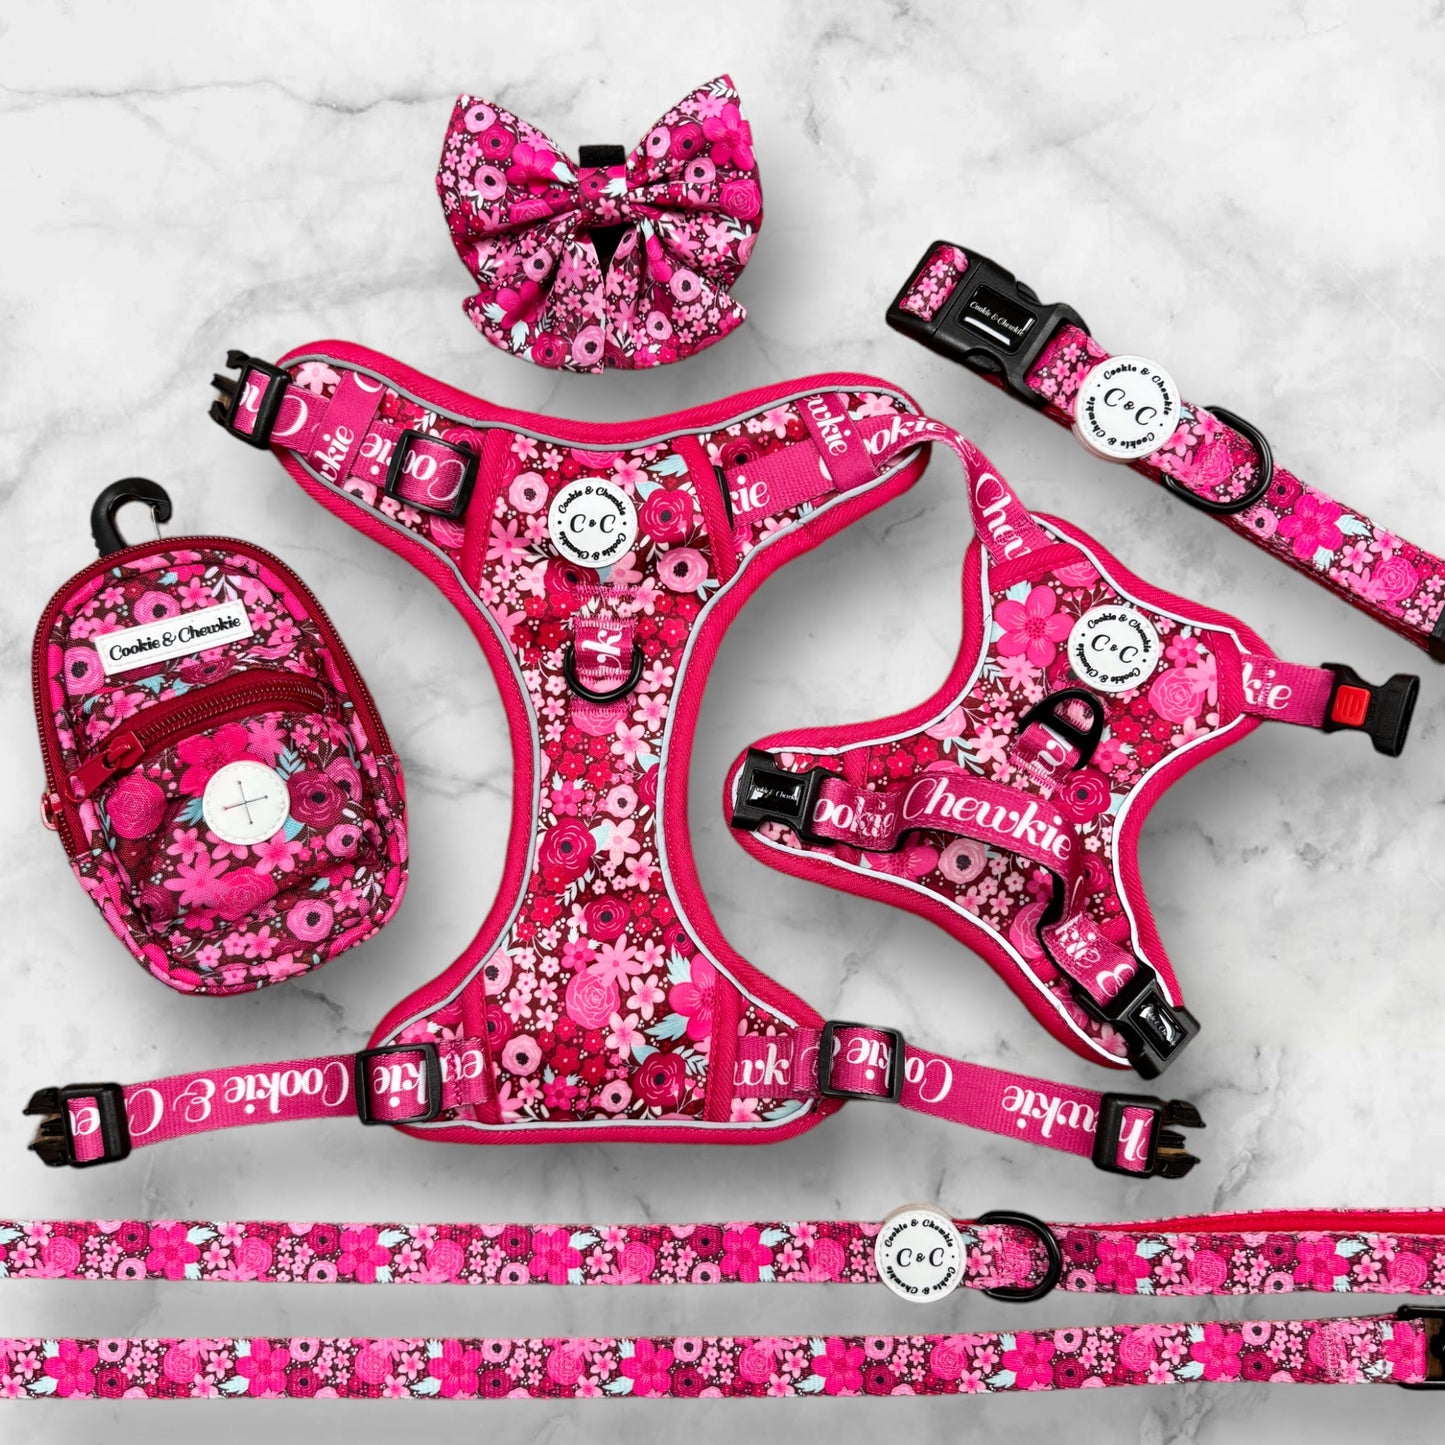 Adjustable TUFF Harness - 'On Chewsdays, We Wear Pink'